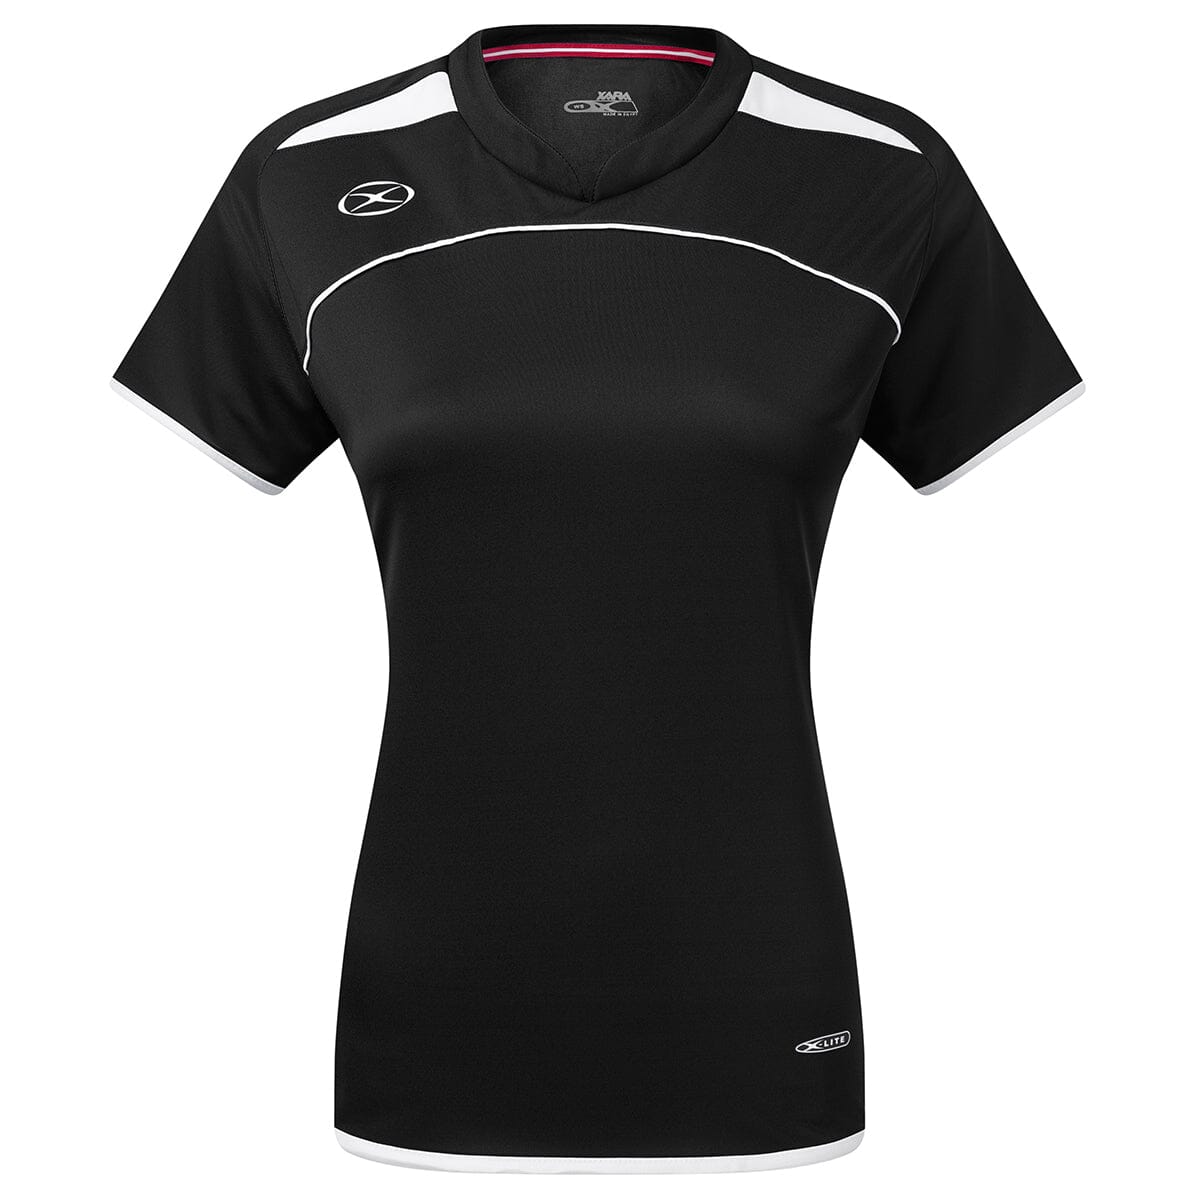 Cardiff Jersey - Female Shirt Xara Soccer Black/White Womens Extra Large 